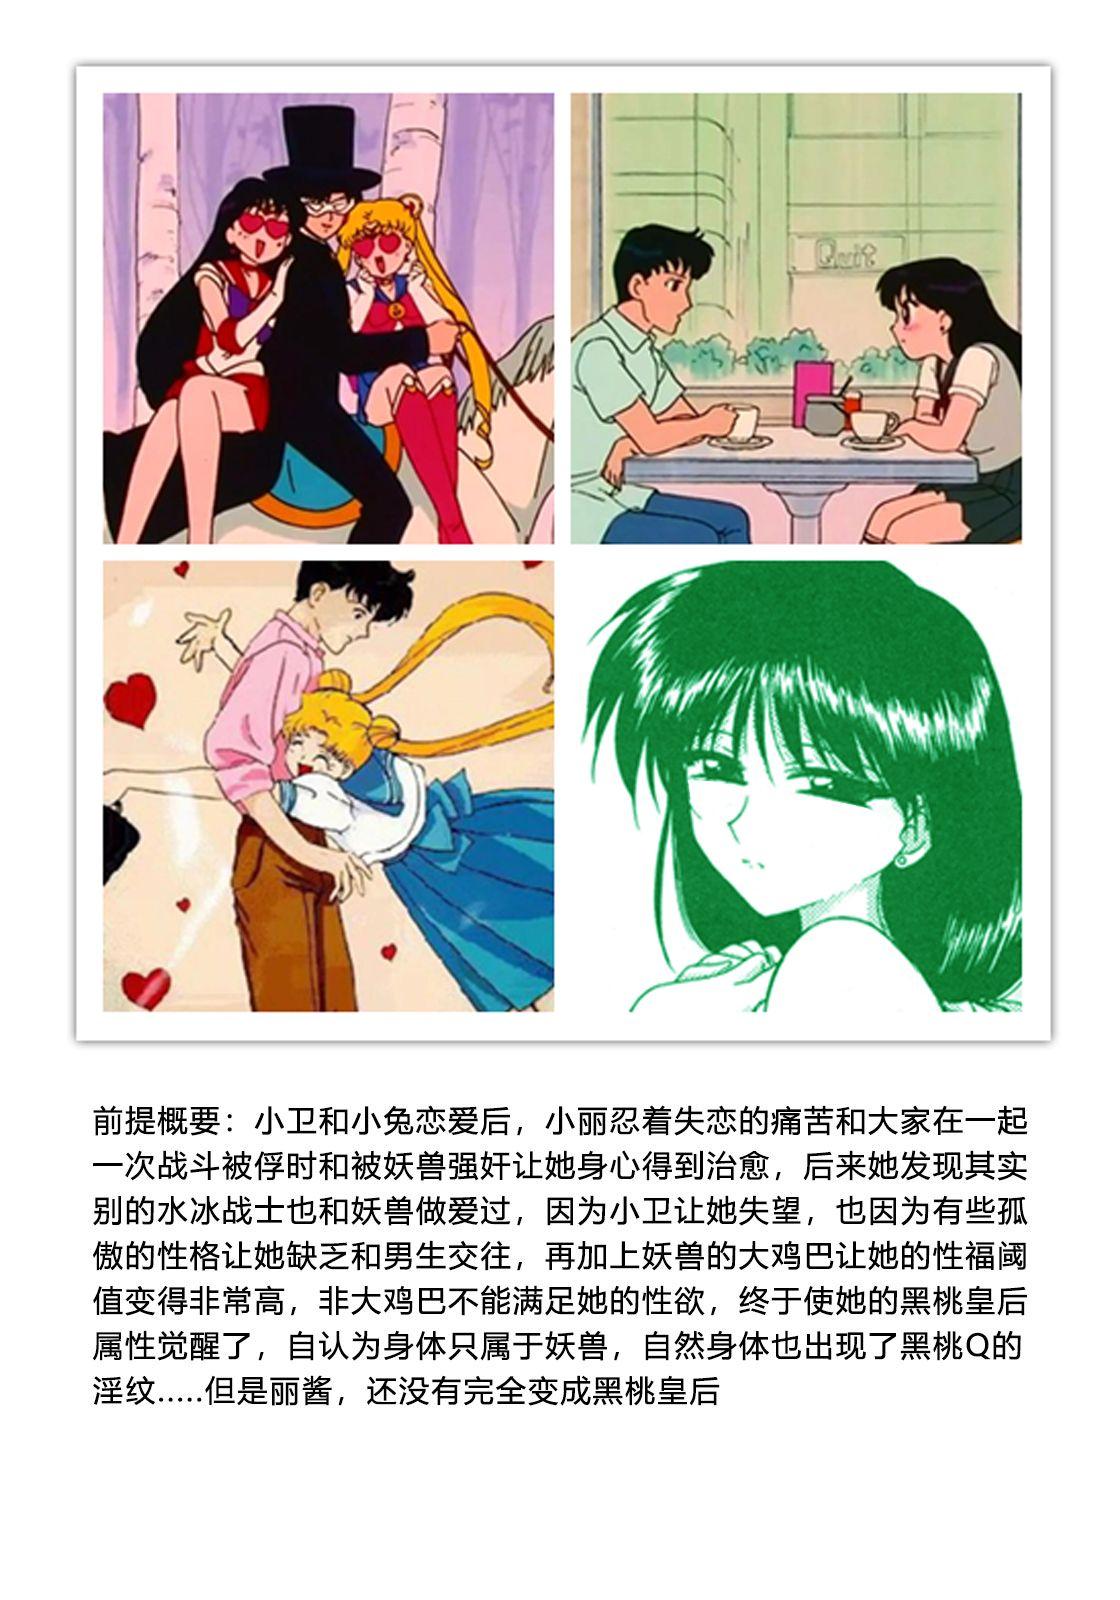 Trap QUEEN OF SPADES - 黑桃皇后 - Sailor moon Anus - Page 12